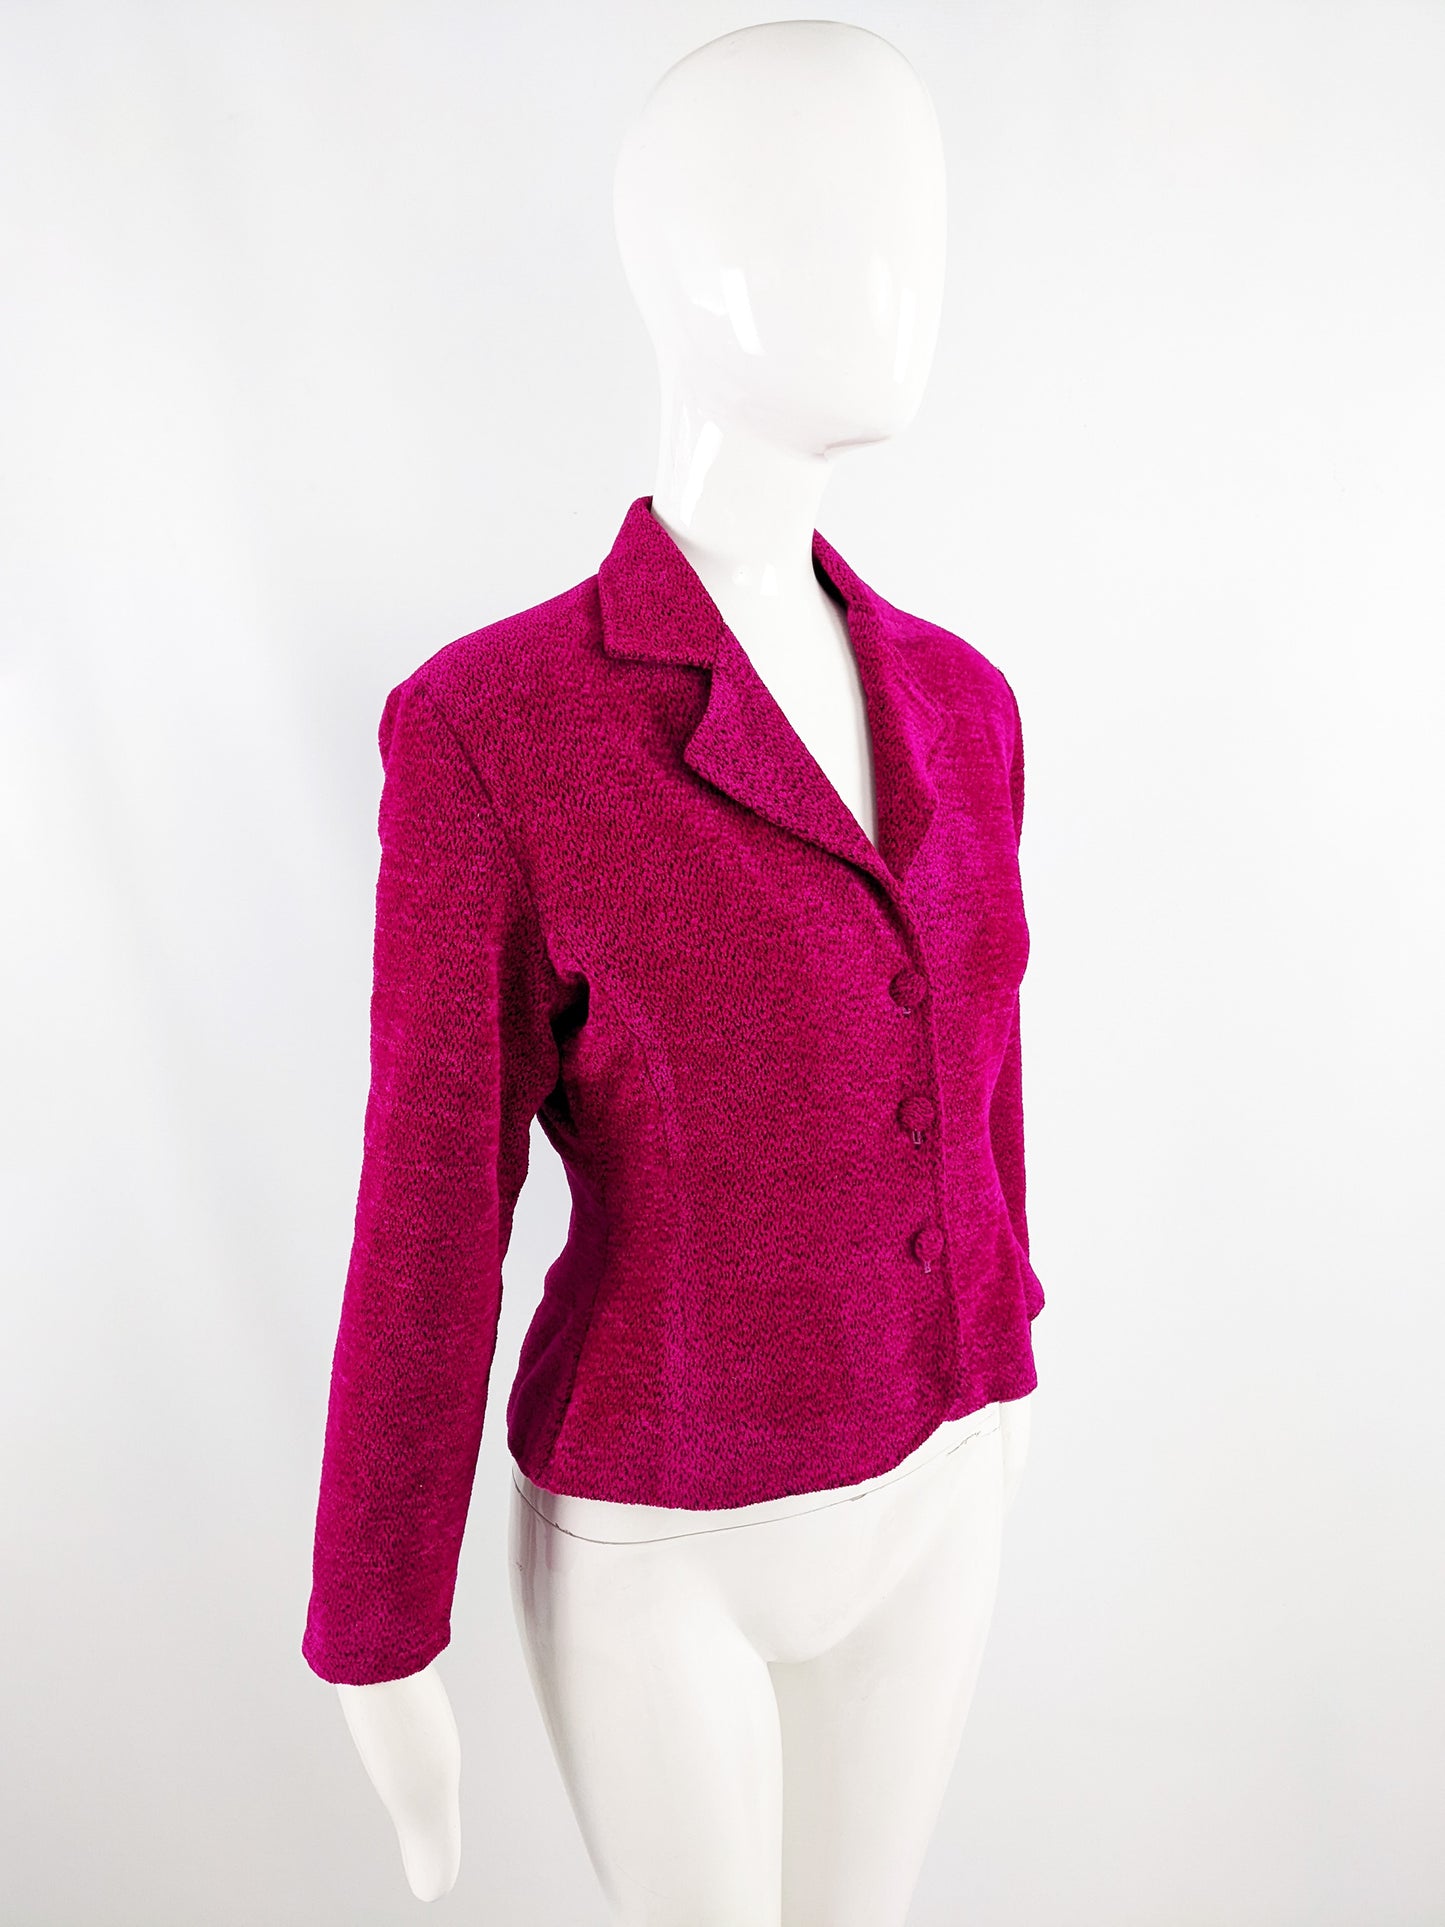 Superlove Vintage y2k Pink Textured Velvet Peplum Jacket, 1990s